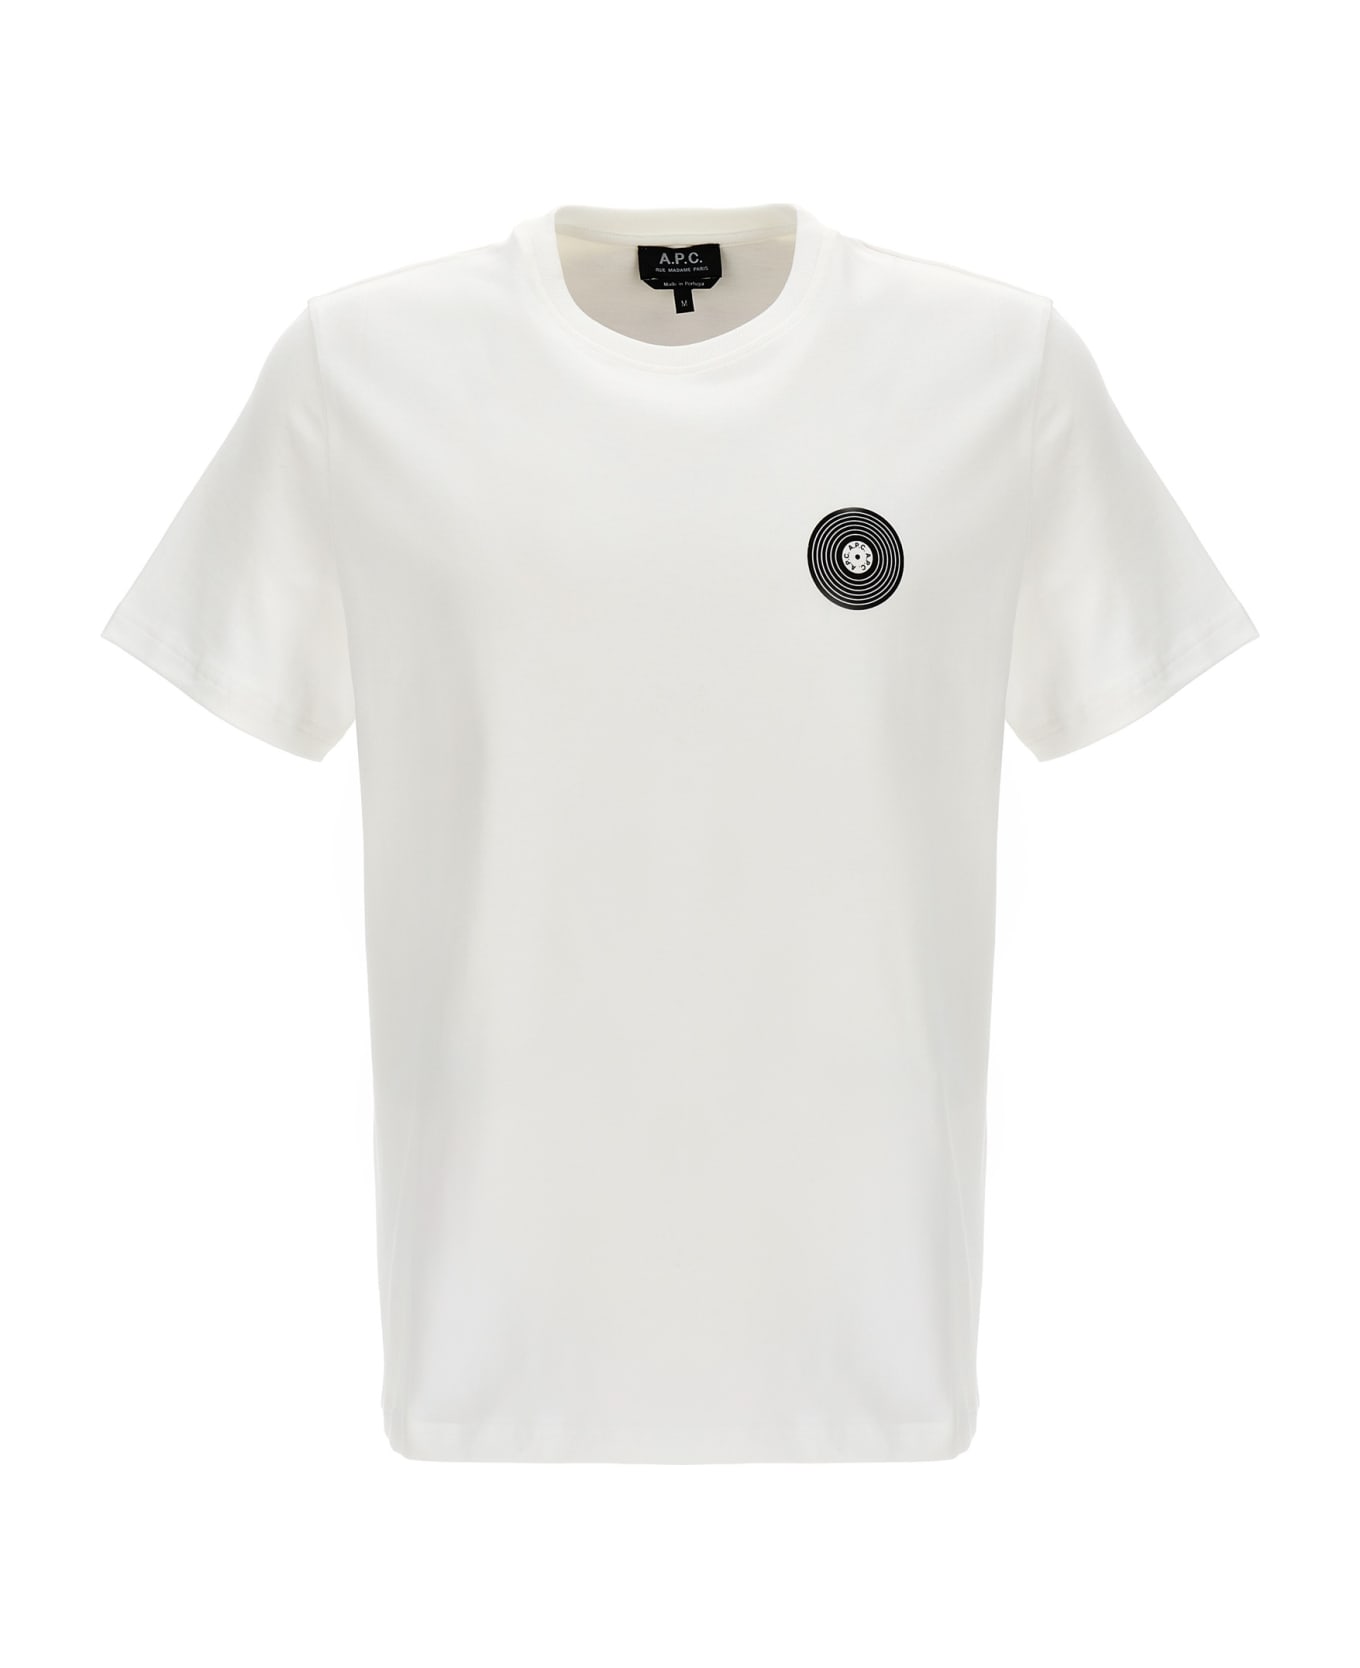 A.P.C. Madison T-shirt - White/Black シャツ